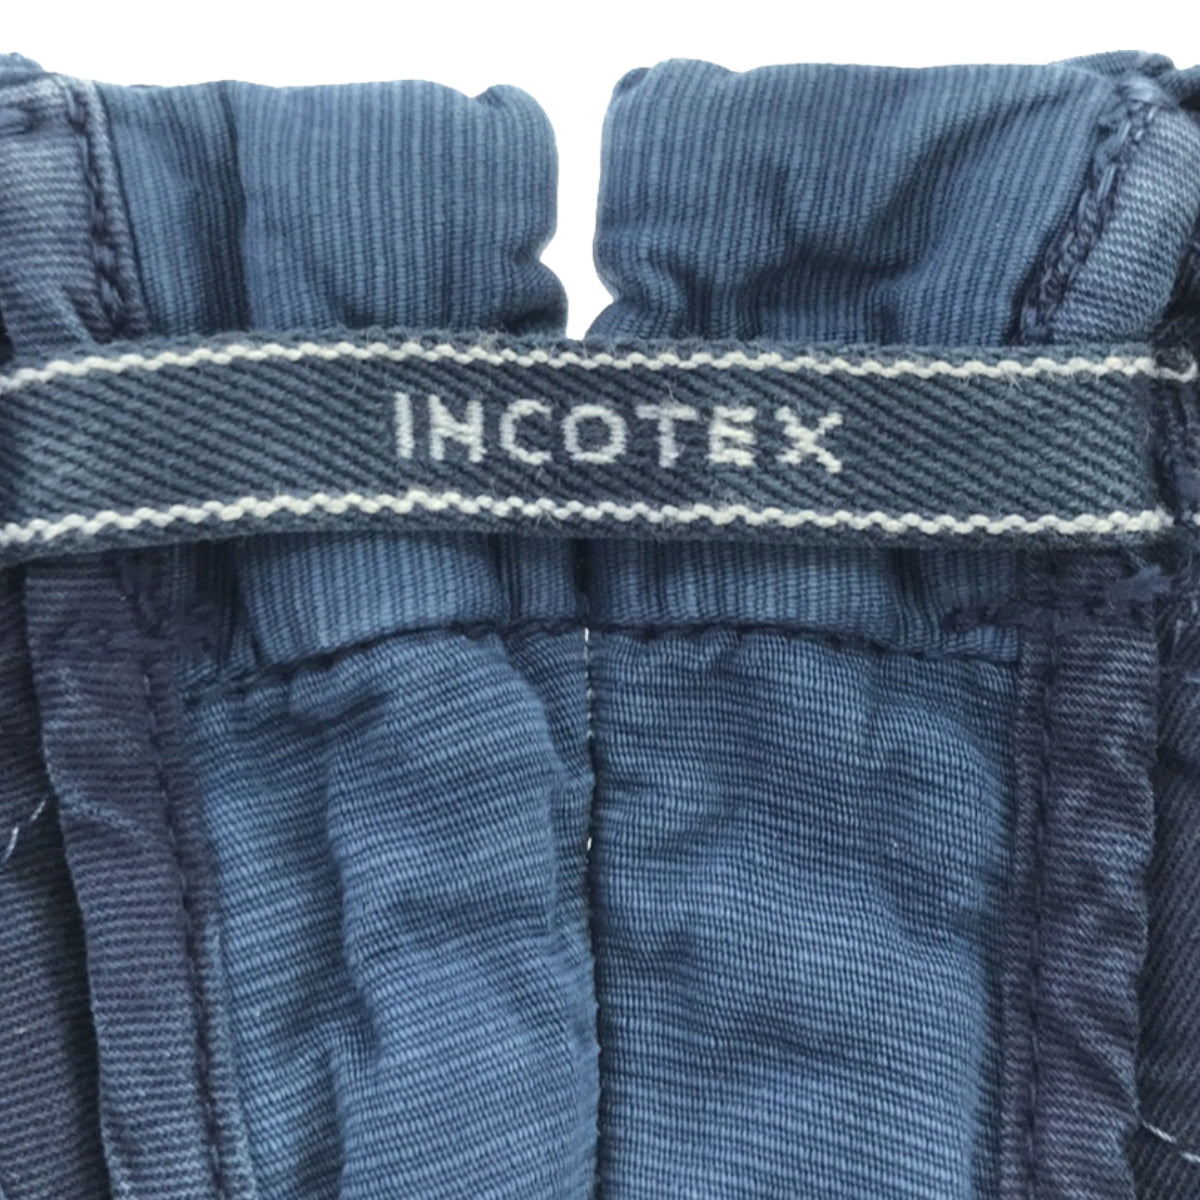 INCOTEX / インコテックス | SLIM FIT コットン リネン タック テーパードスラックス | 31 | メンズ